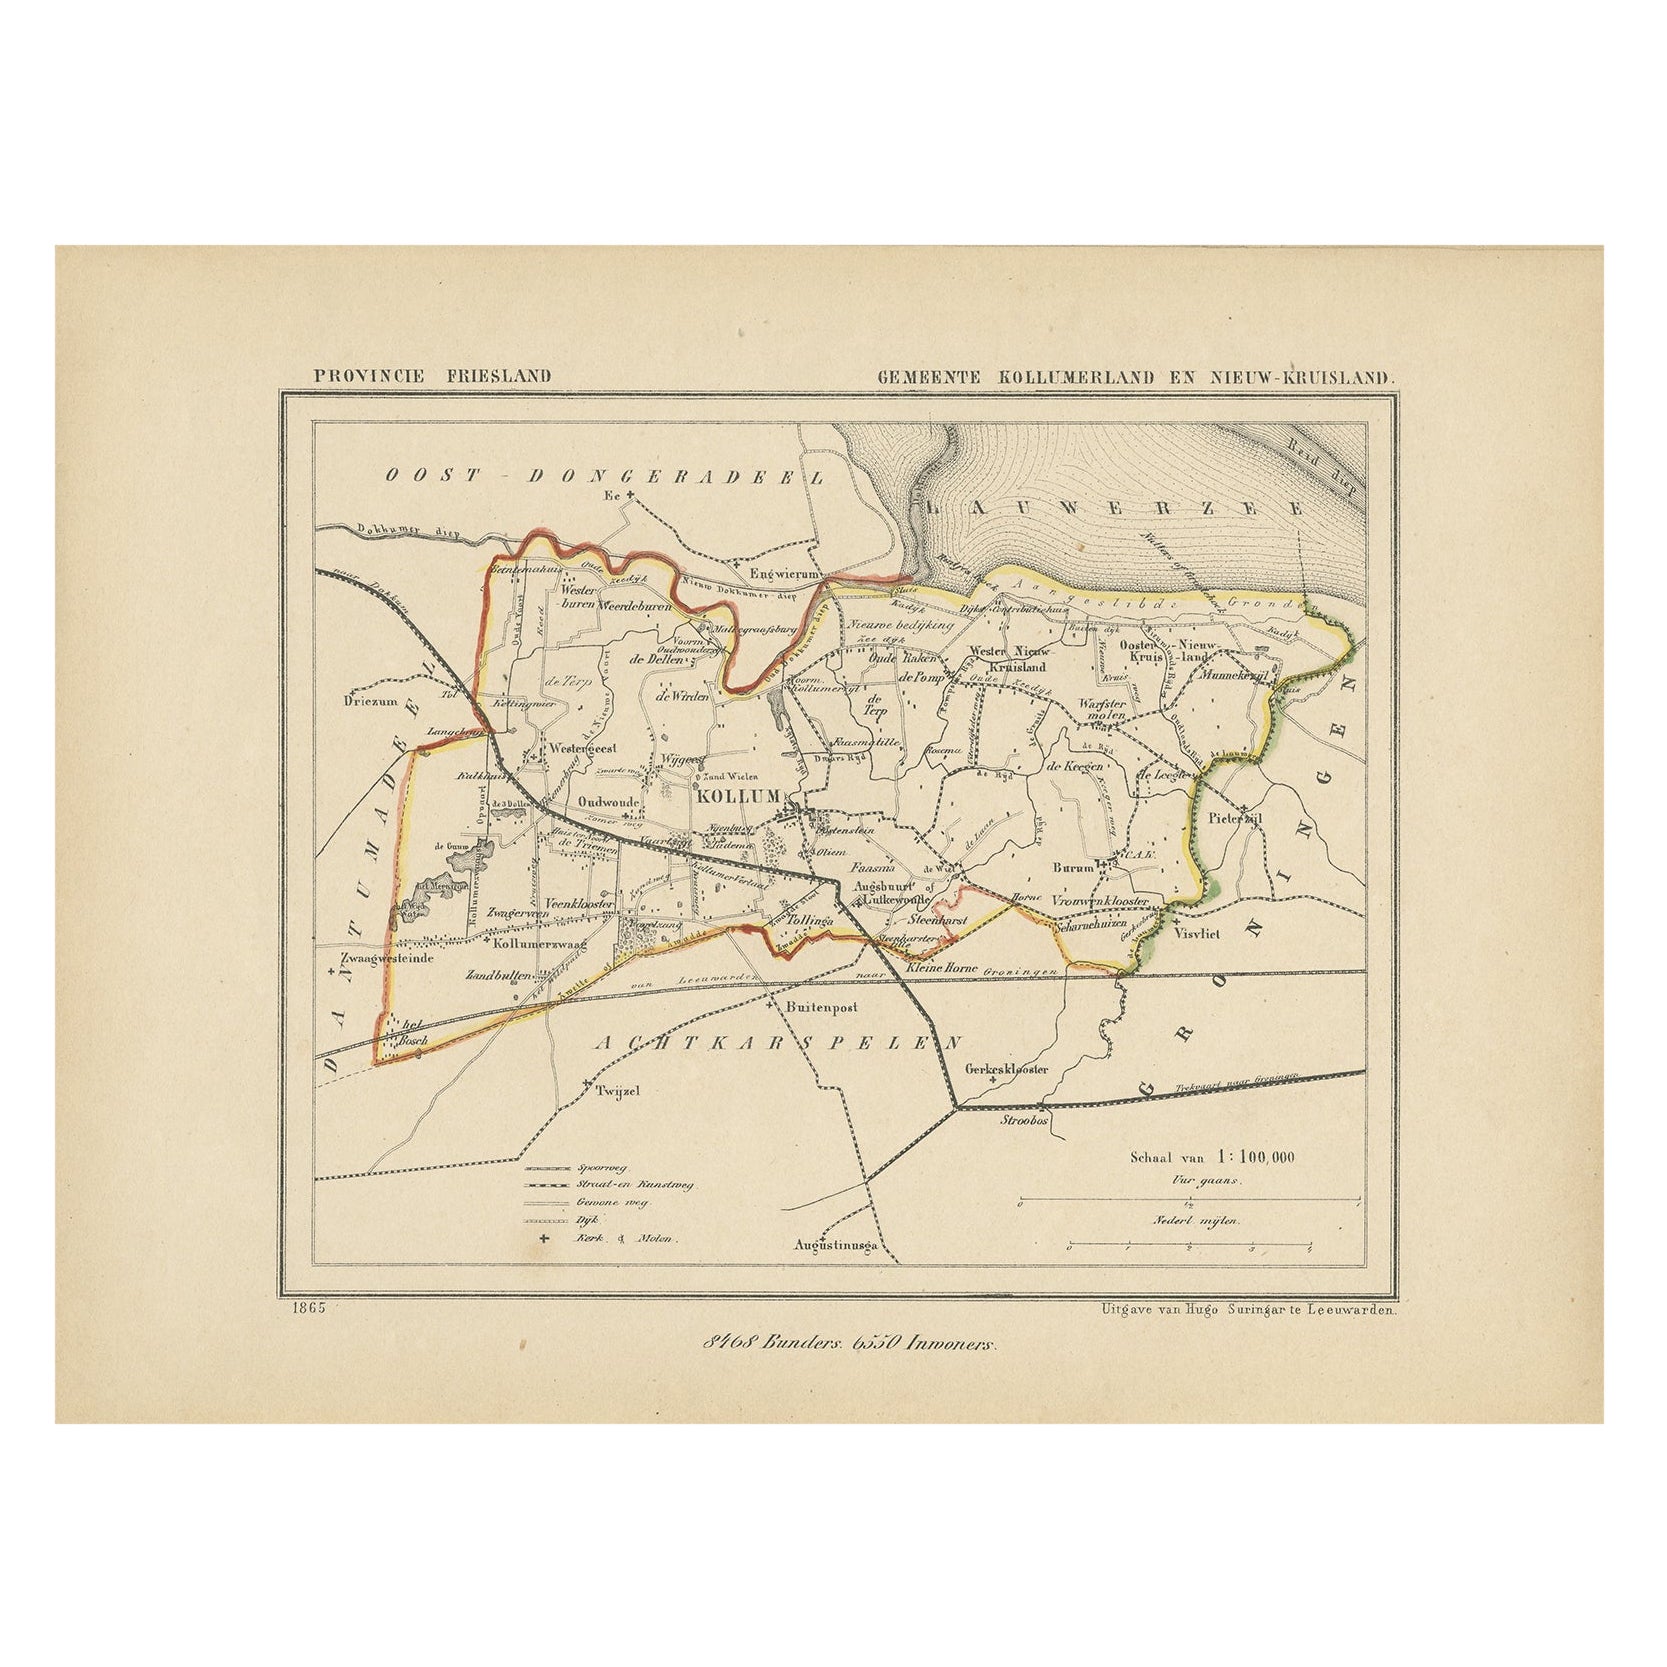 Antique Map of Kollumerland in Friesland, The Netherlands, 1868